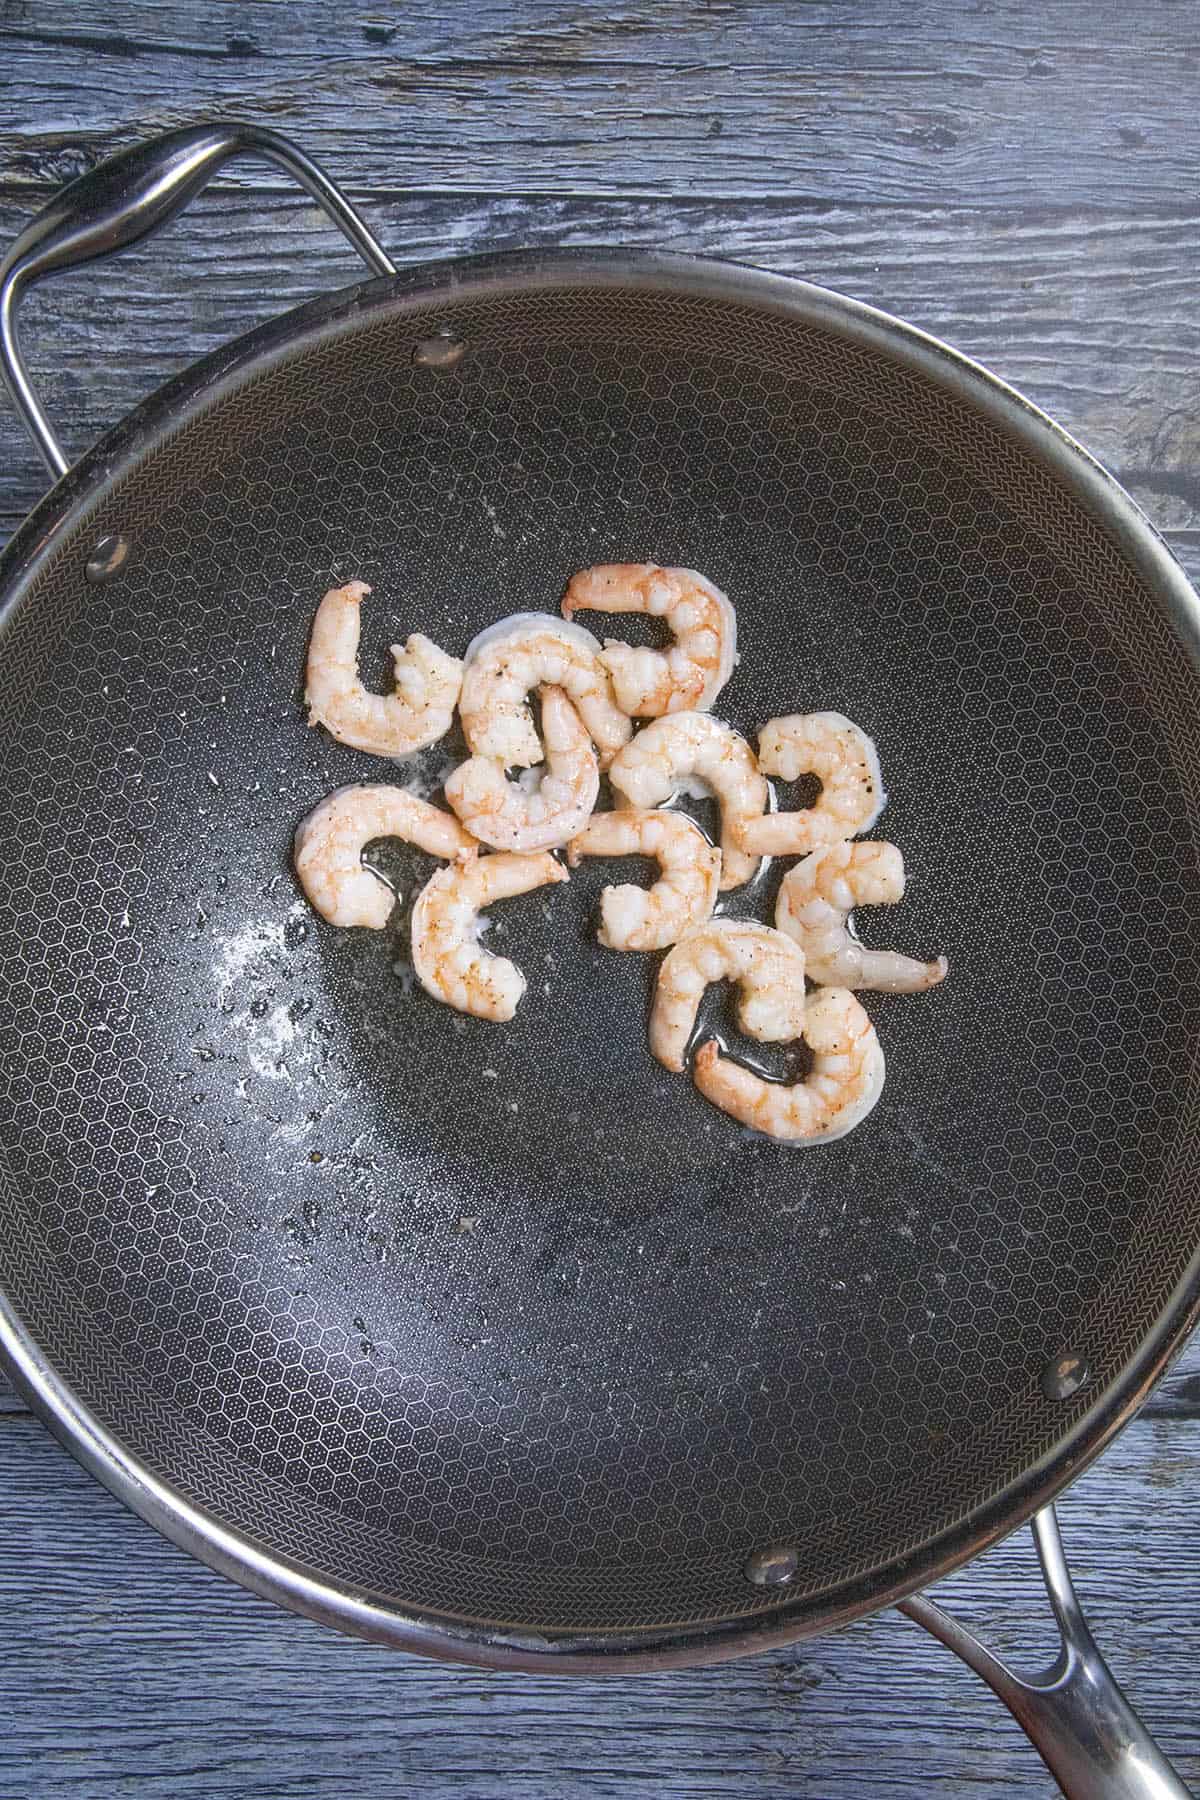 Cooking shrimp to make Pad Thai